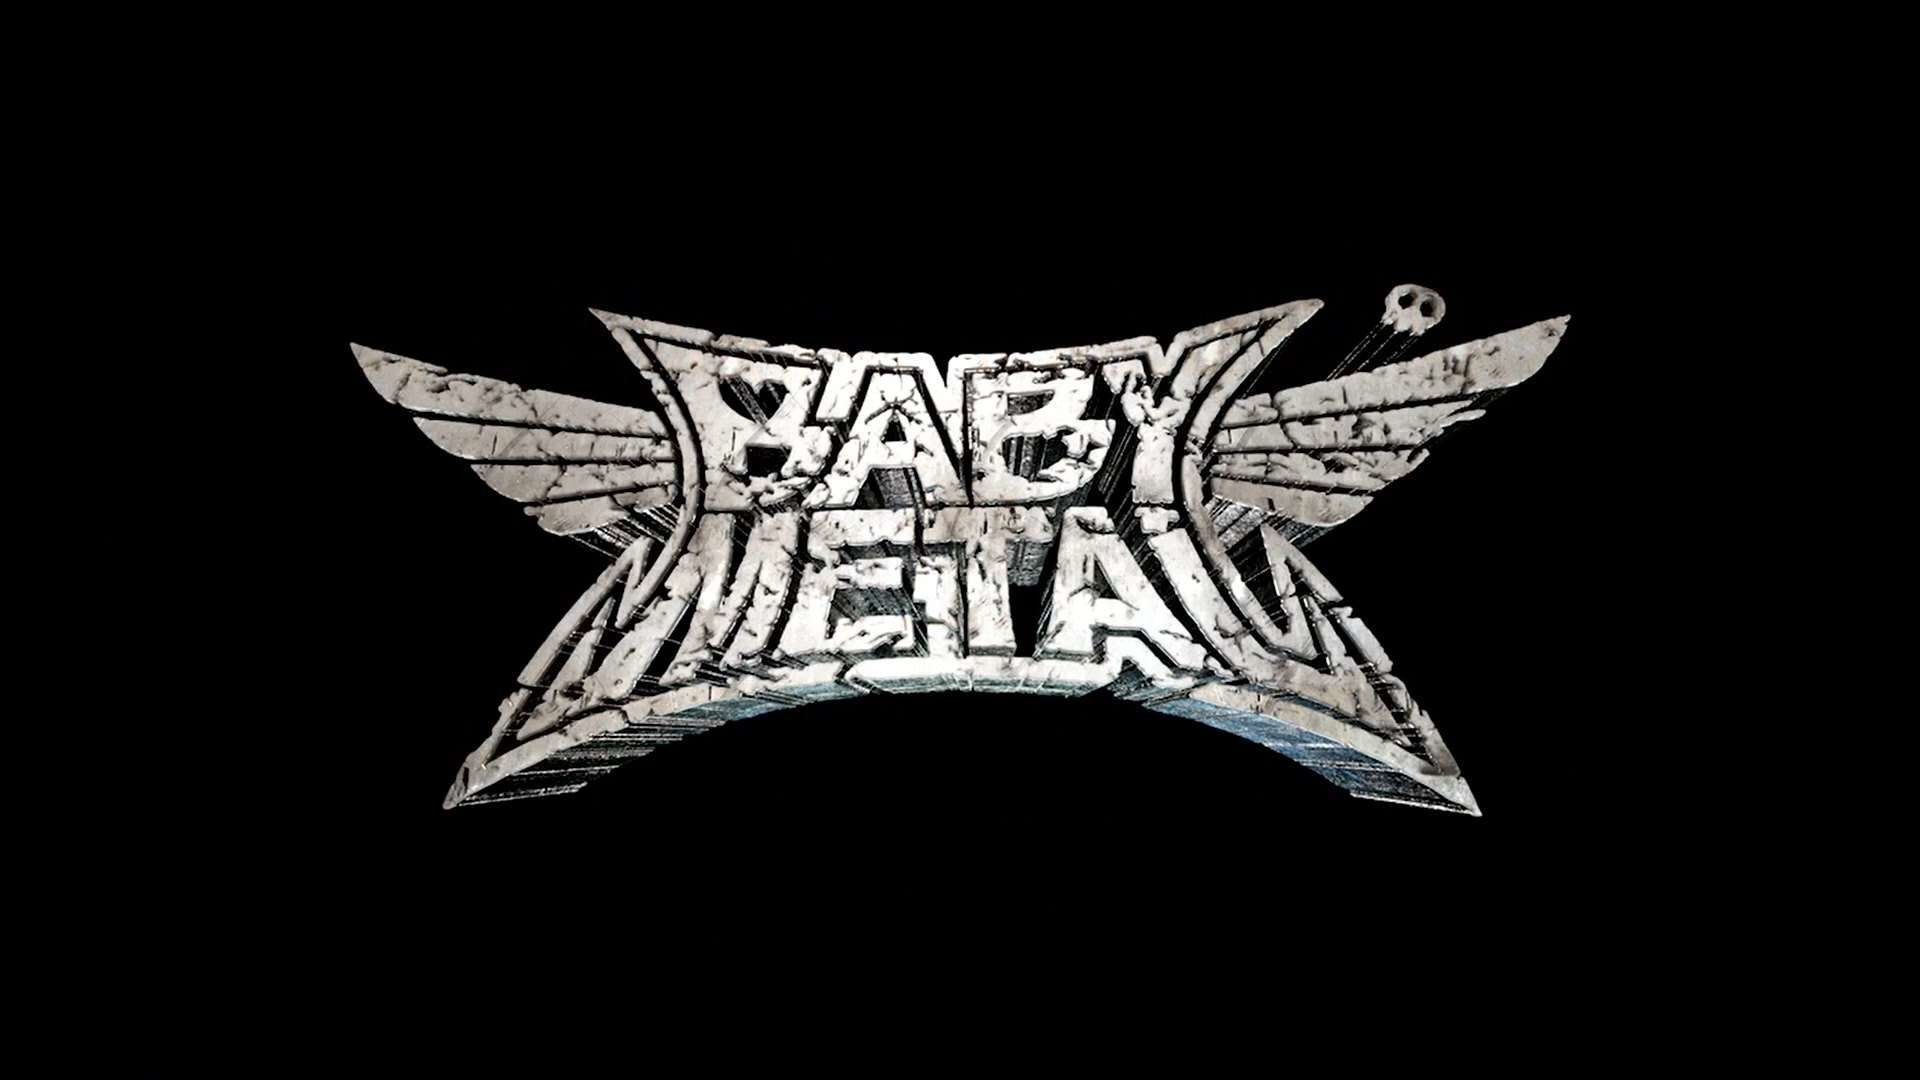 Baby Metal Wallpaper Hd 76 Images